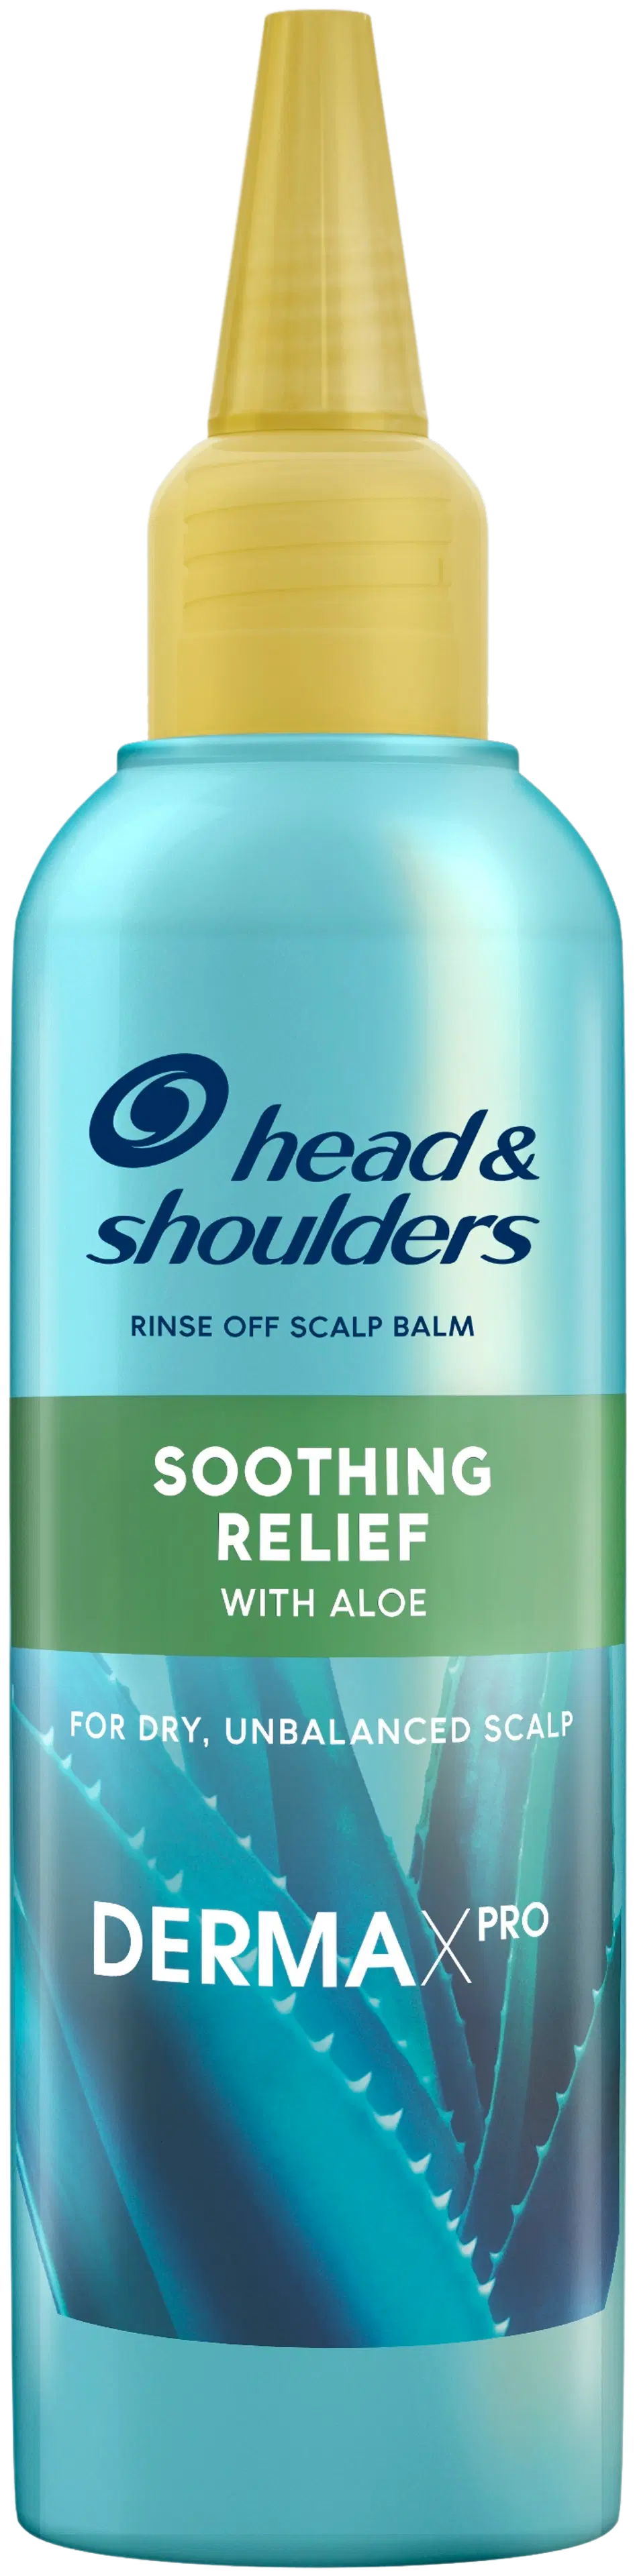 head&shoulders hoitoaine hiuspohjalle DermaX Pro Soothing Relief 145ml